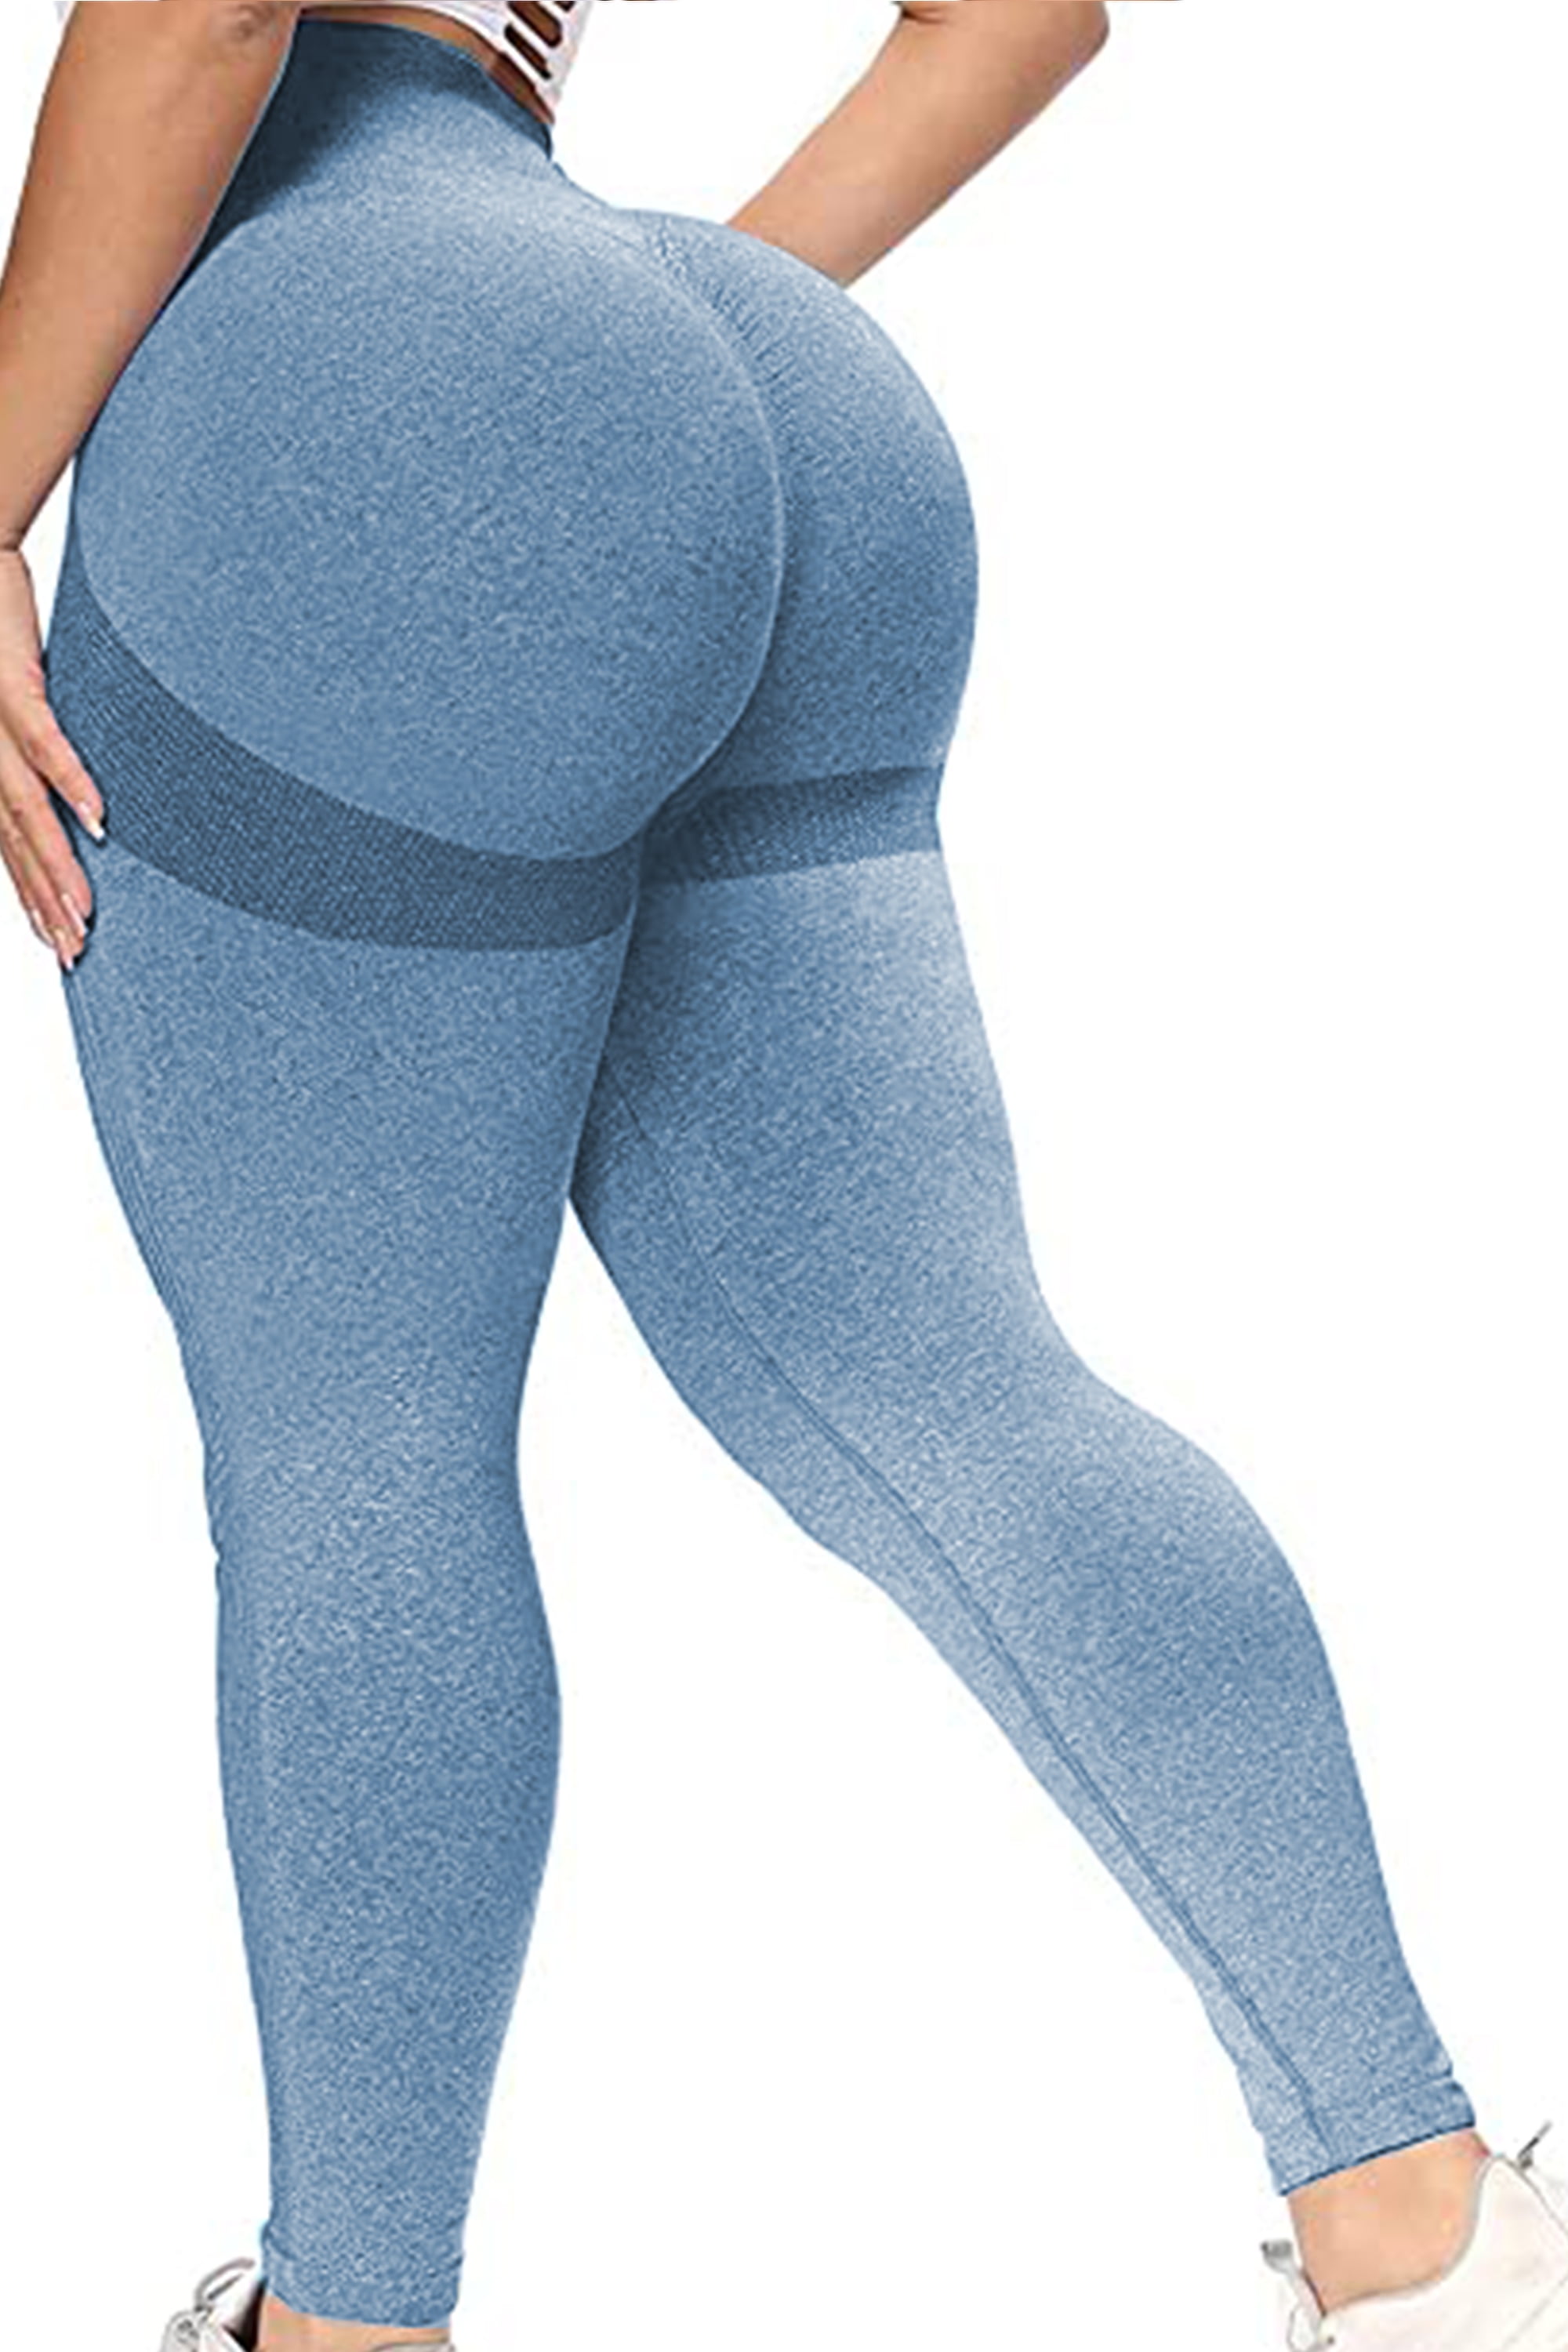 FITTOO Women Seamless Smile Contour Leggings Butt Lift Yoga Pants